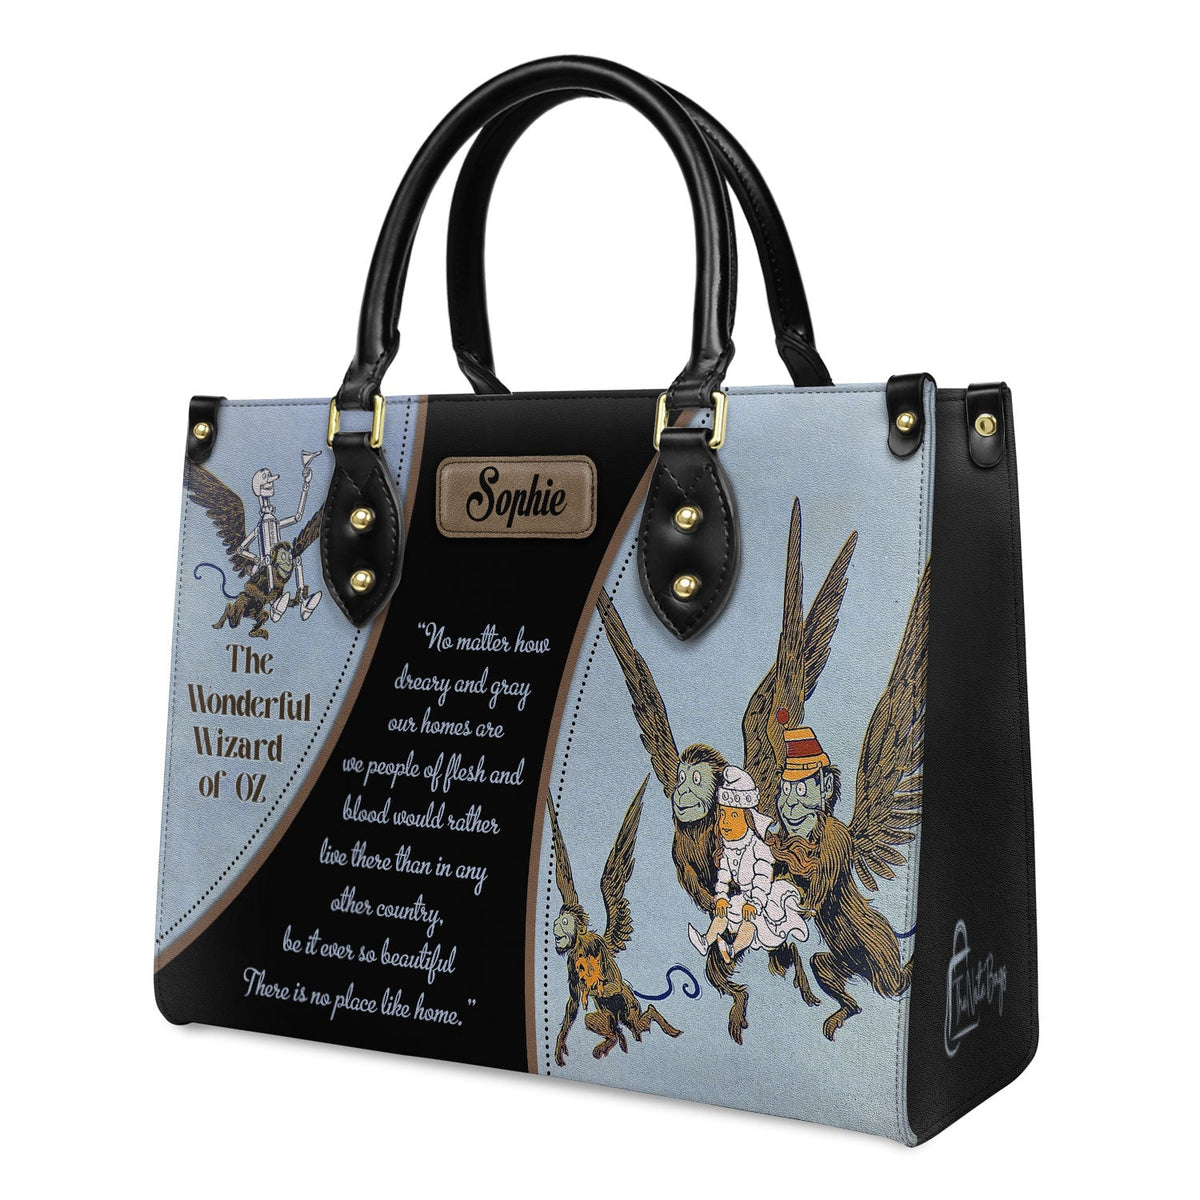 Wizard of Oz purse, Bradford Exchange | eBay